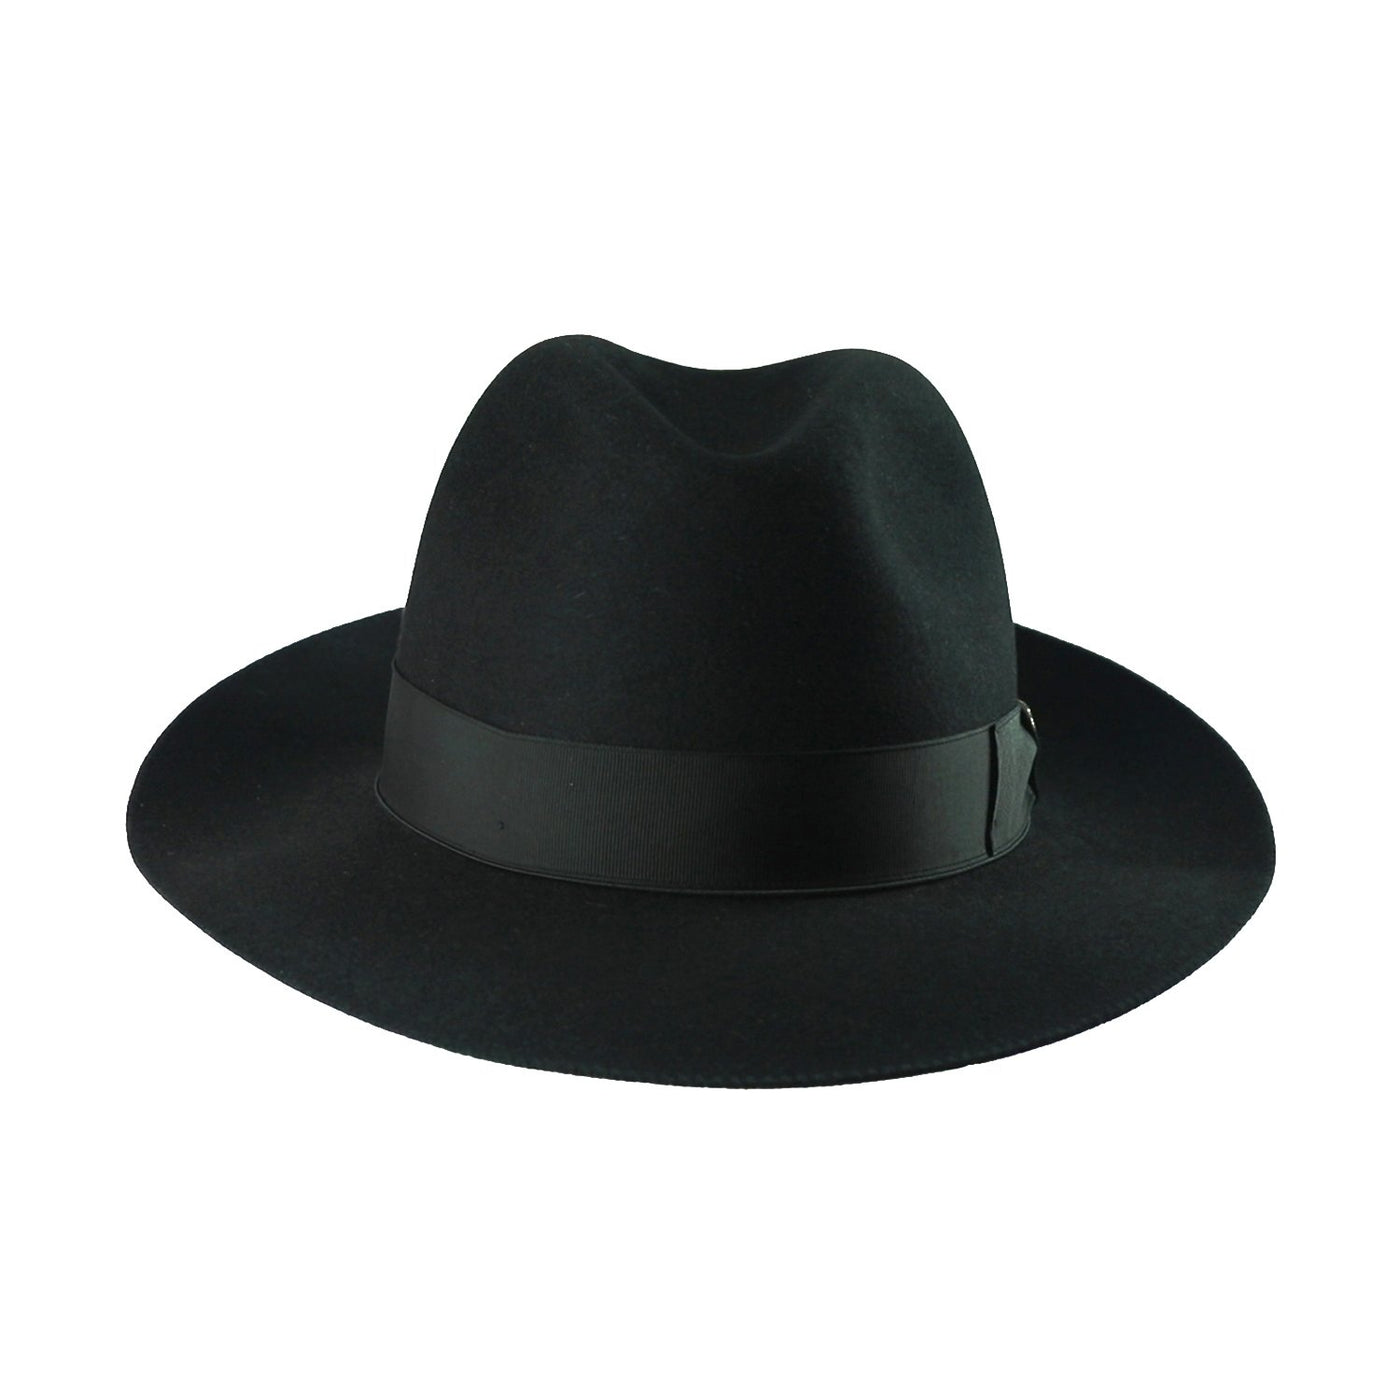 Astuccio 238 - Black, product_type] - Borsalino for Atica fedora hat